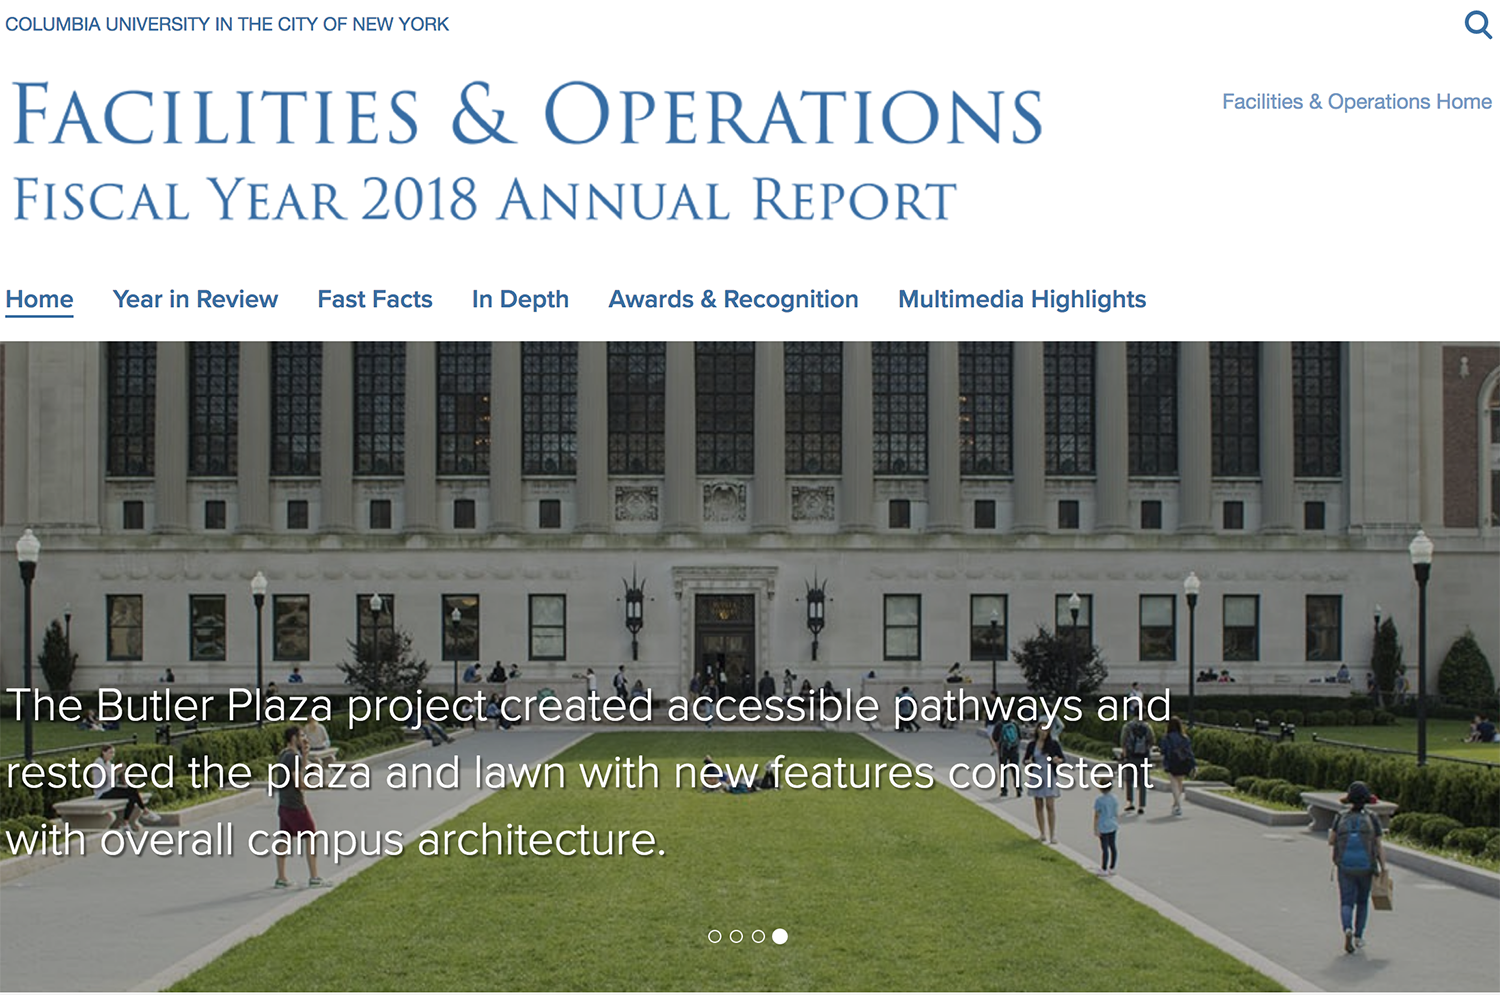 FY18 Annual Report homepage screenshot